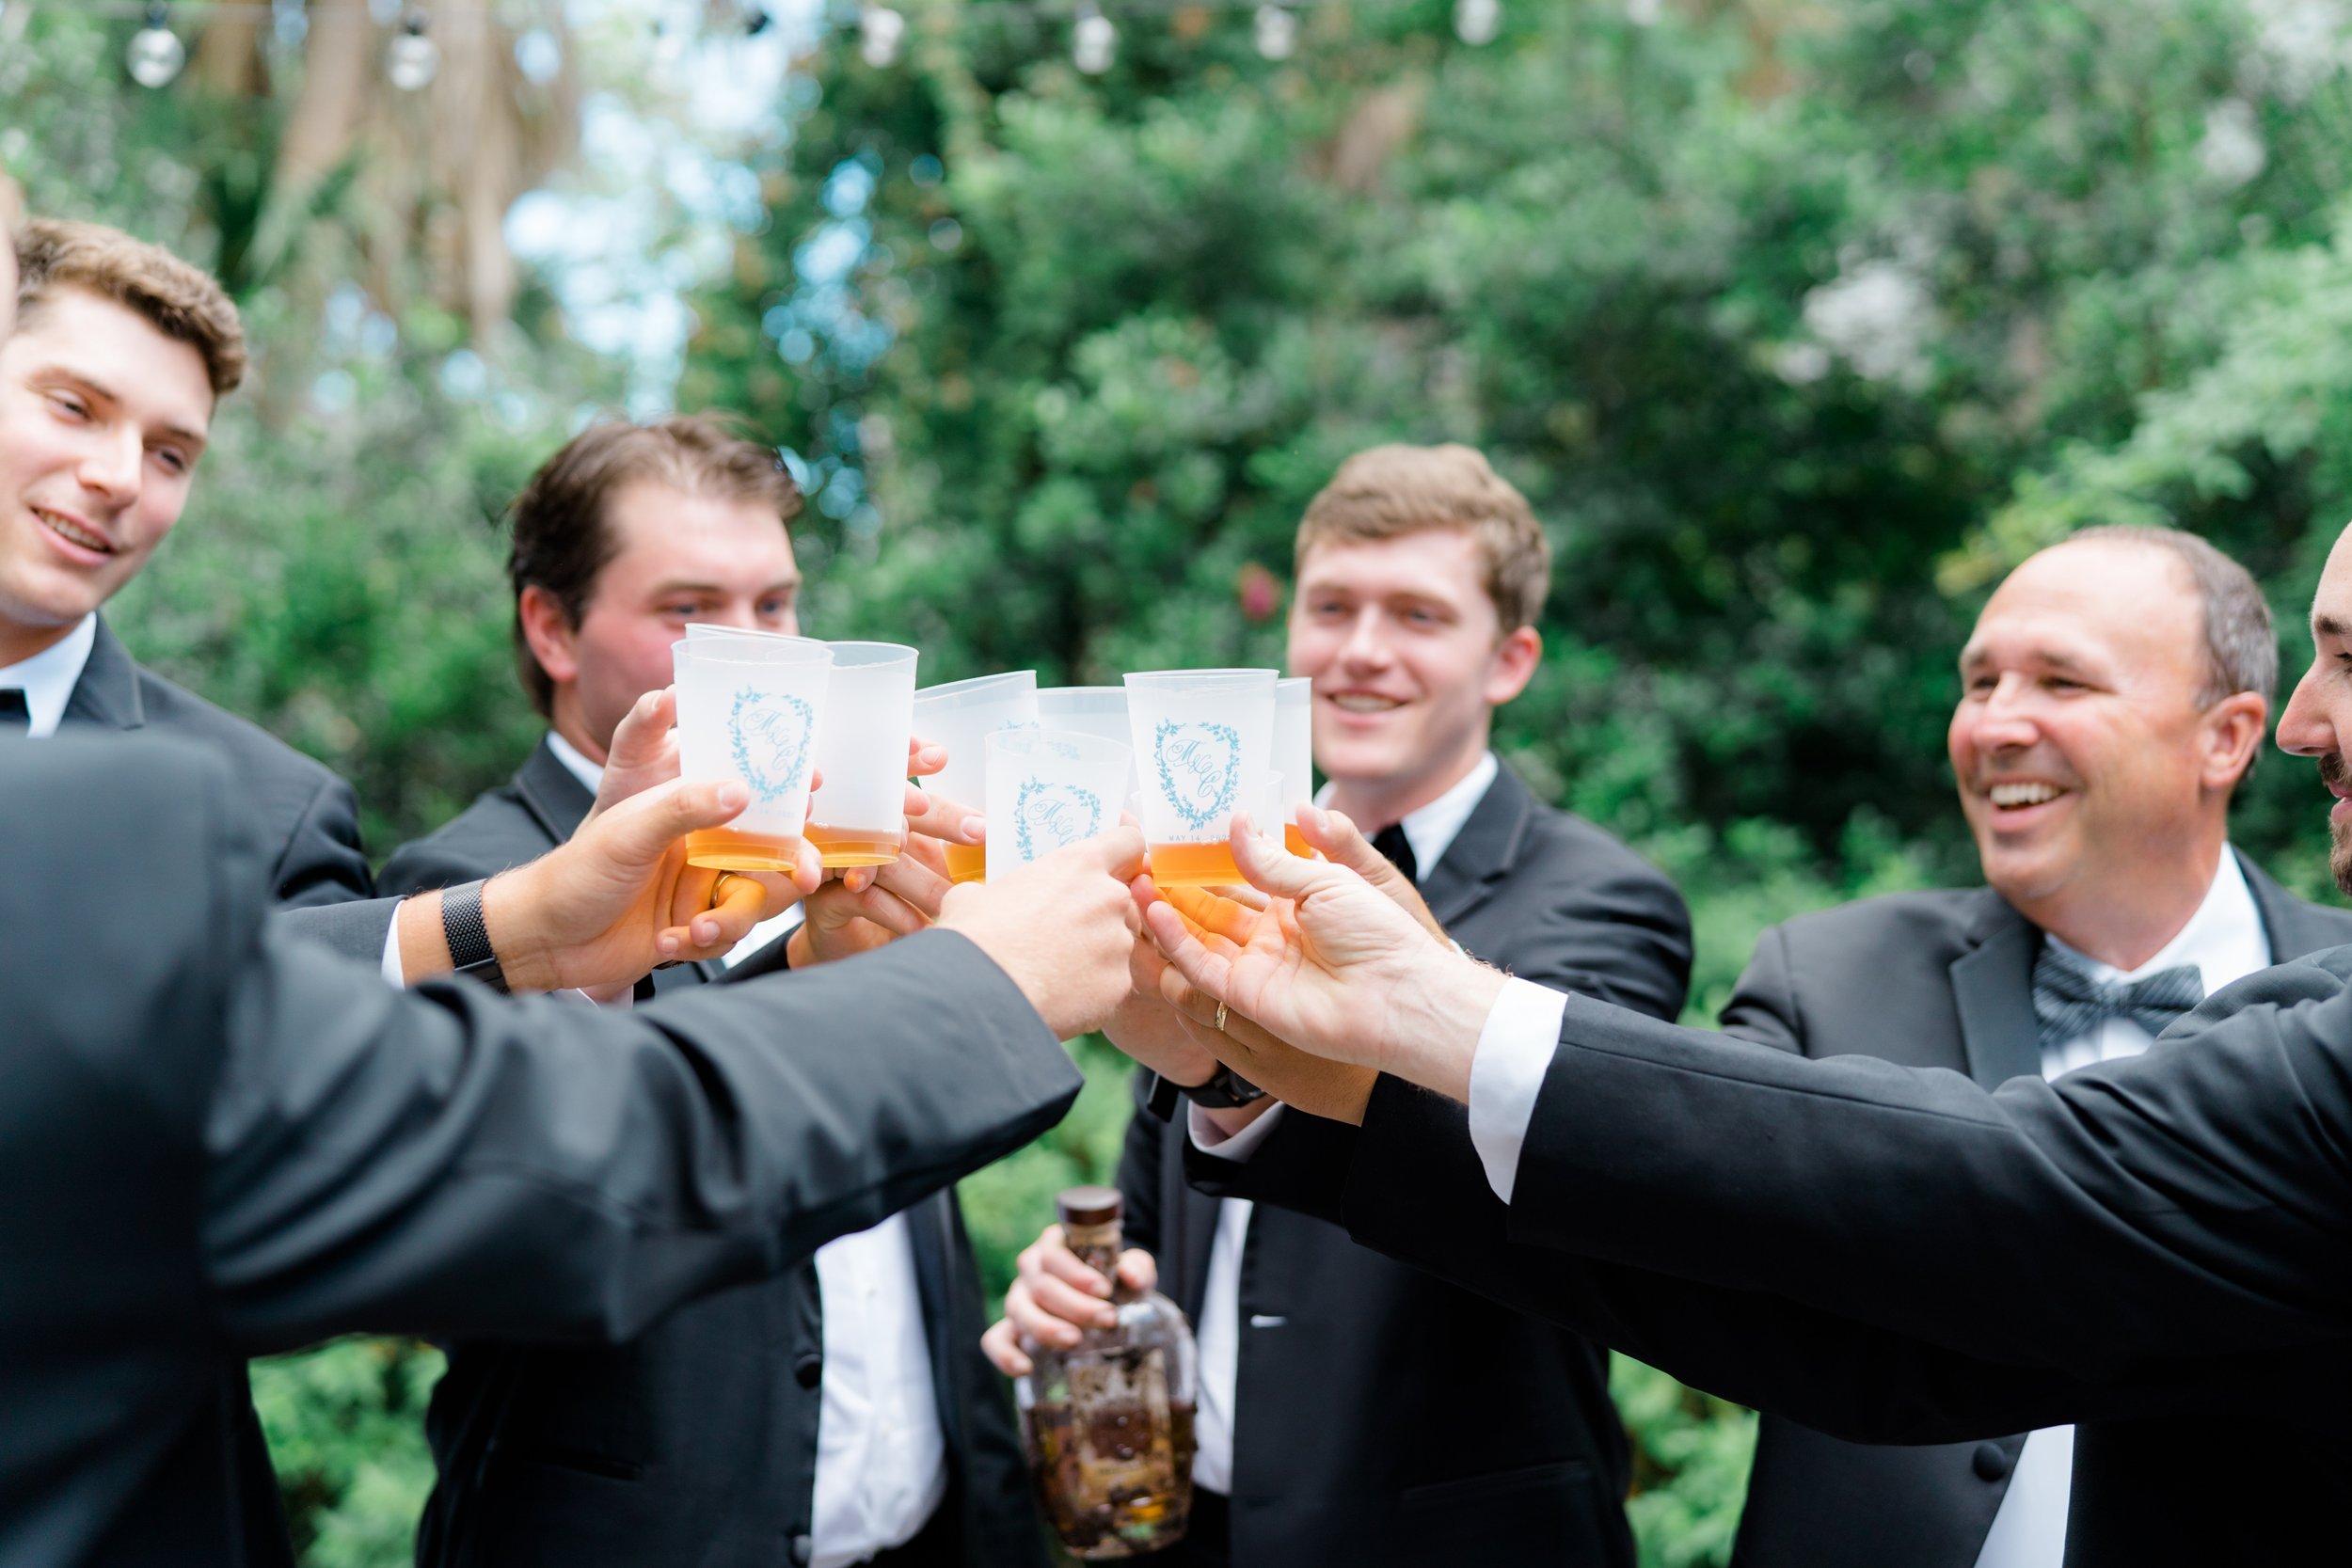 Groomsmen bourbon toast in custom wedding day cups.